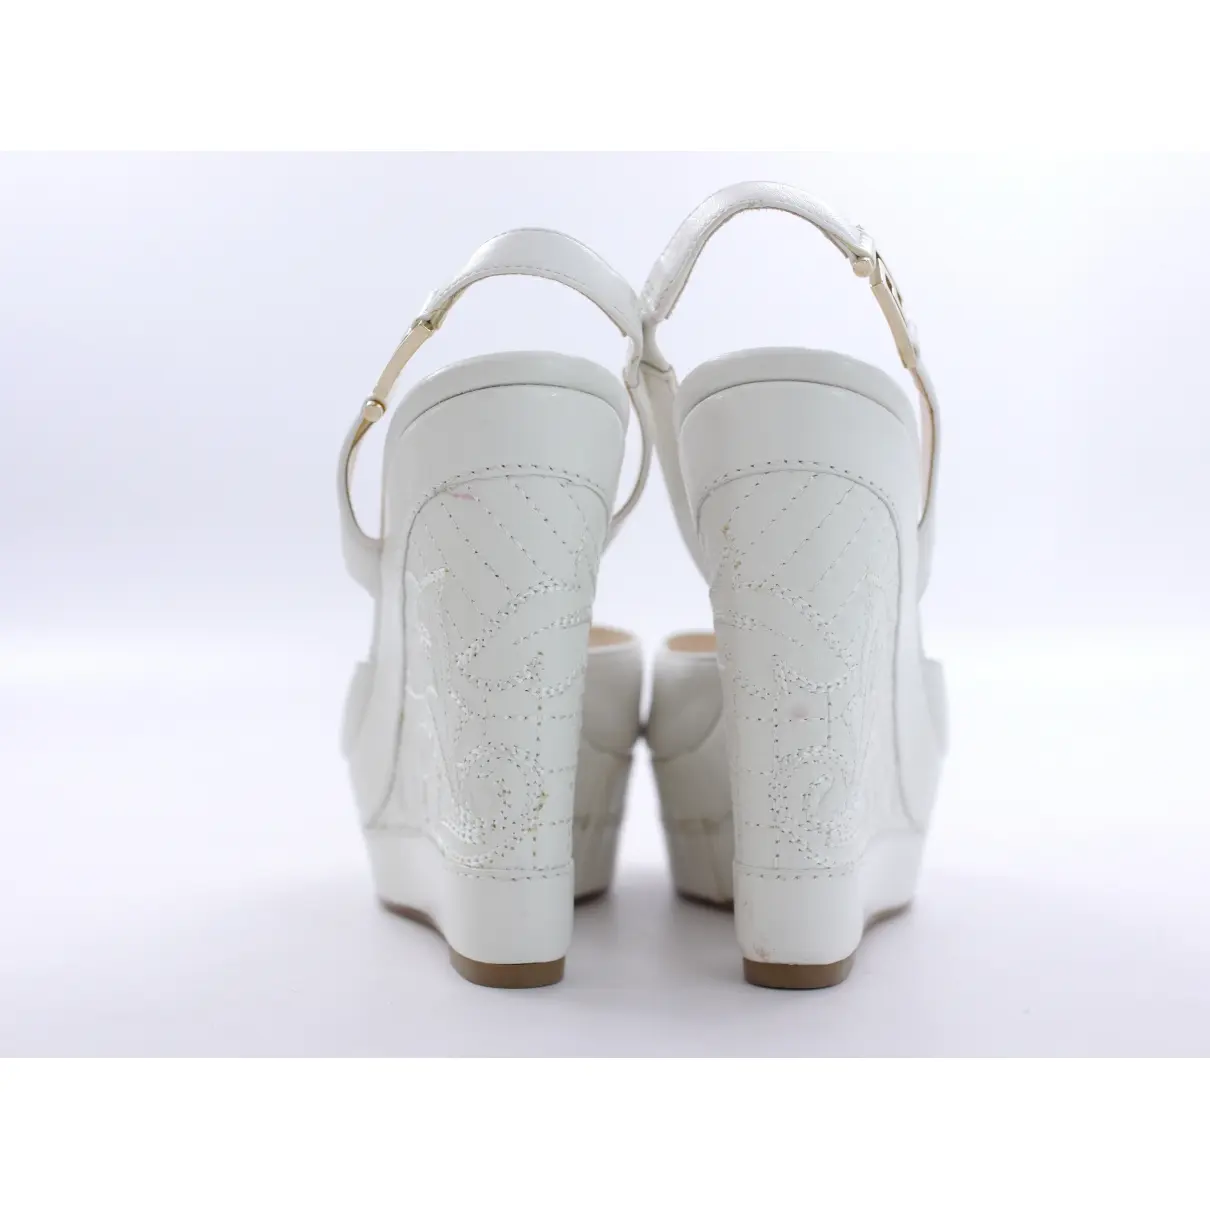 Buy Versace White Leather Heels online